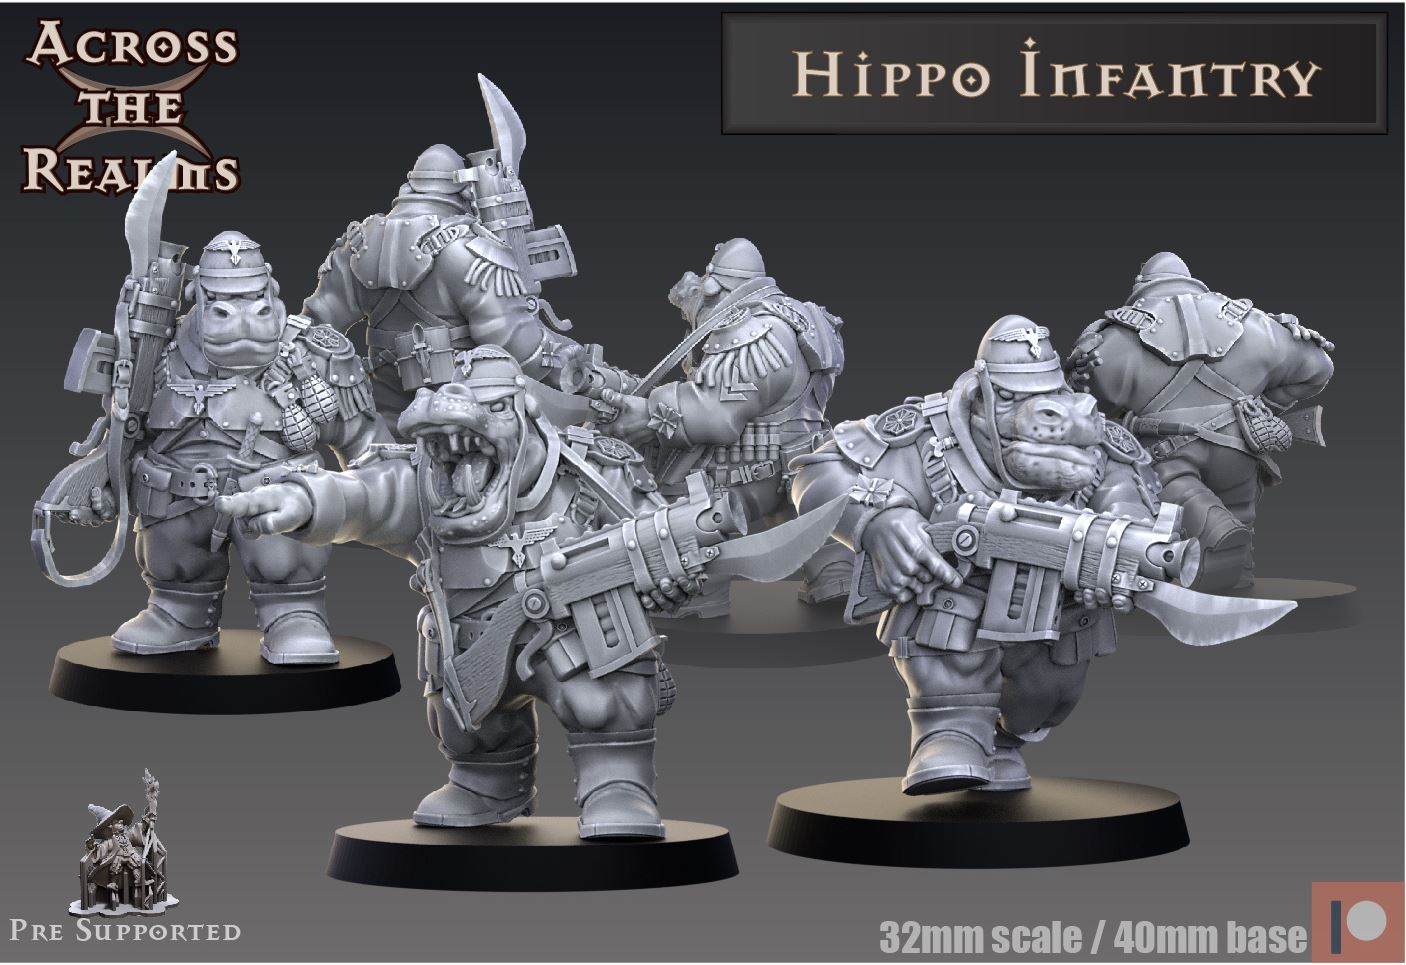 Hippo Infantry Miniatur - Across the Realms